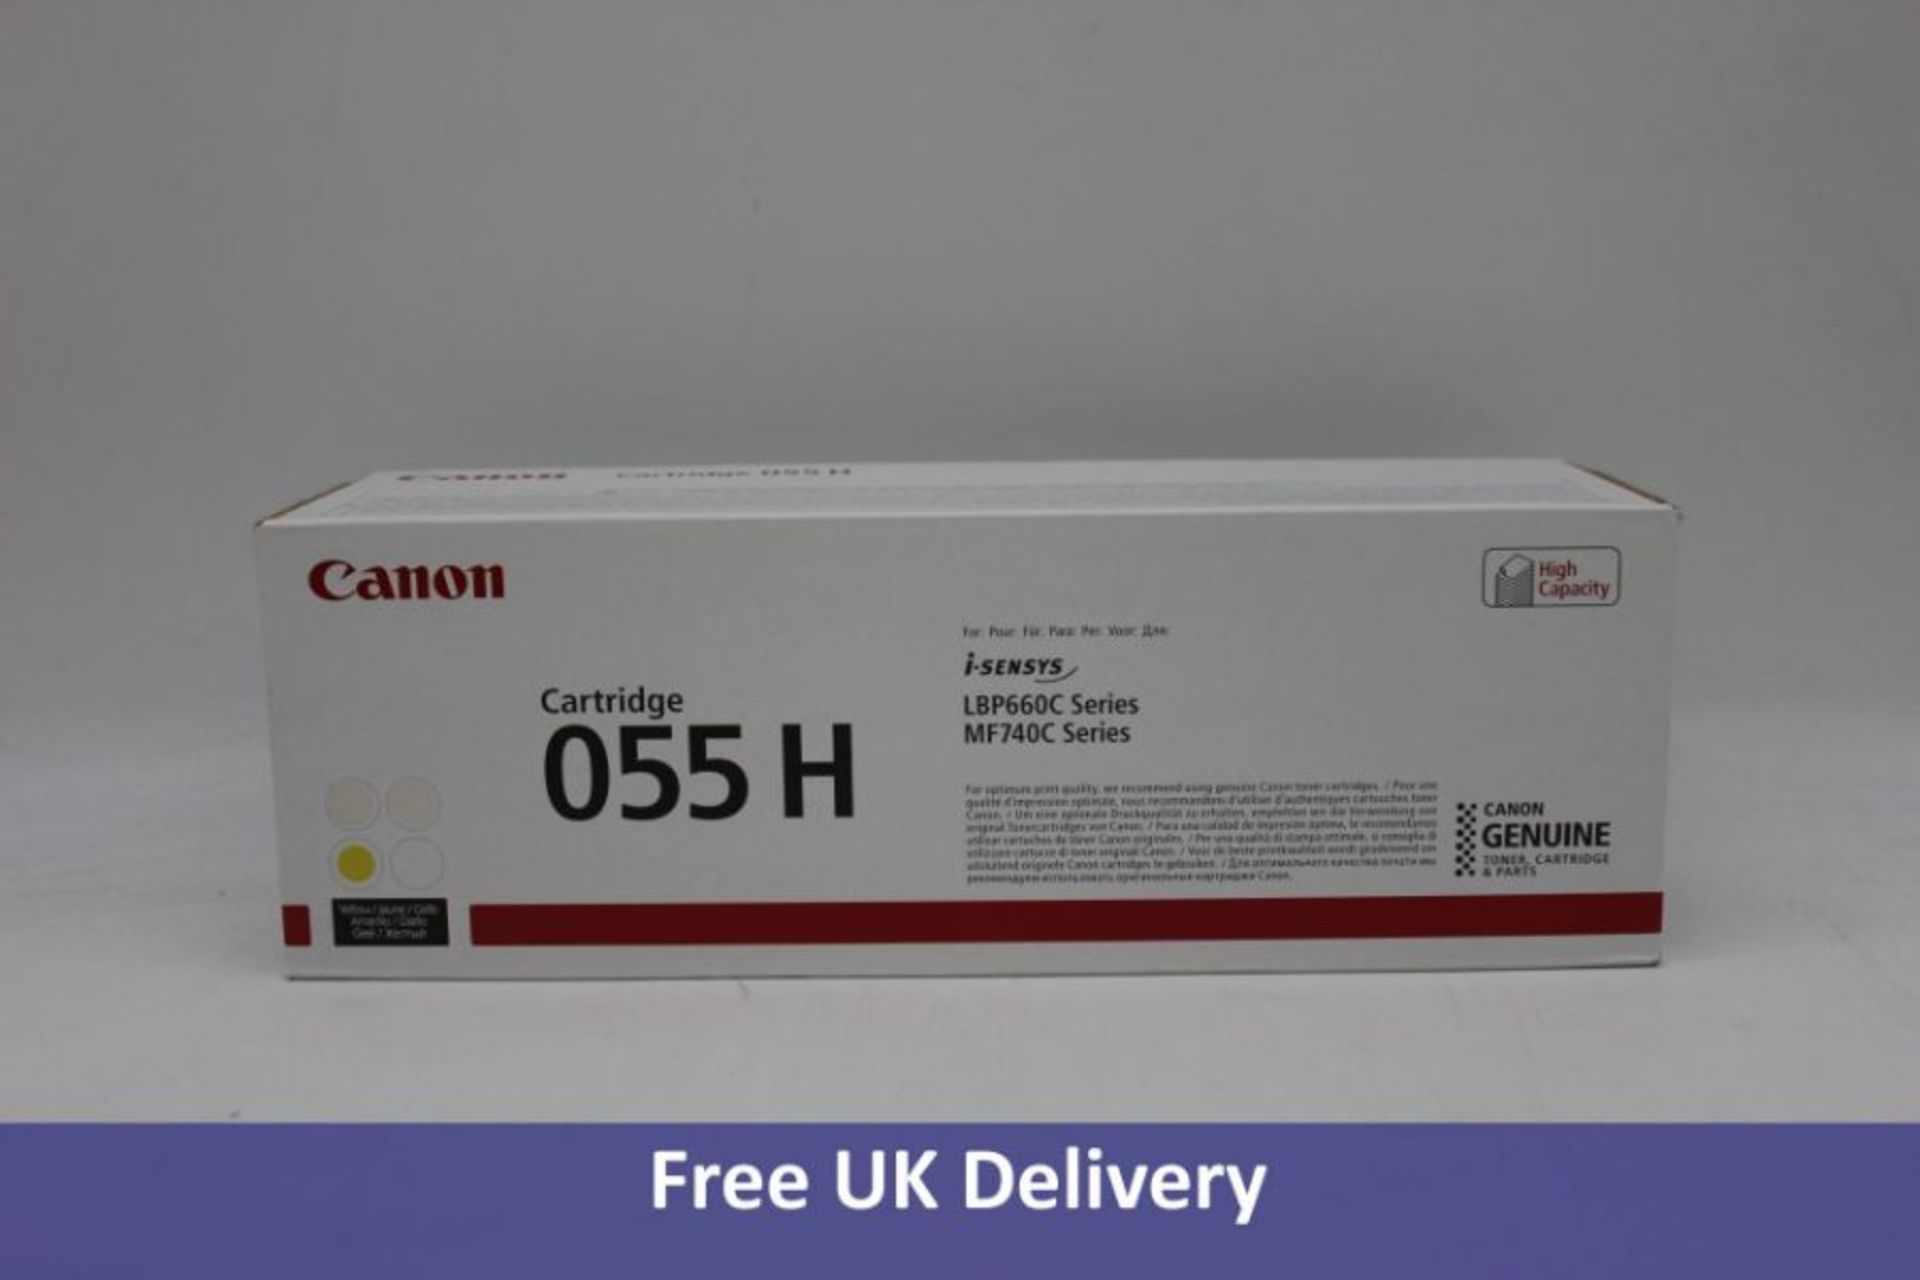 Three Canon Printer Cartridge 055 H, Yellow - Image 2 of 3